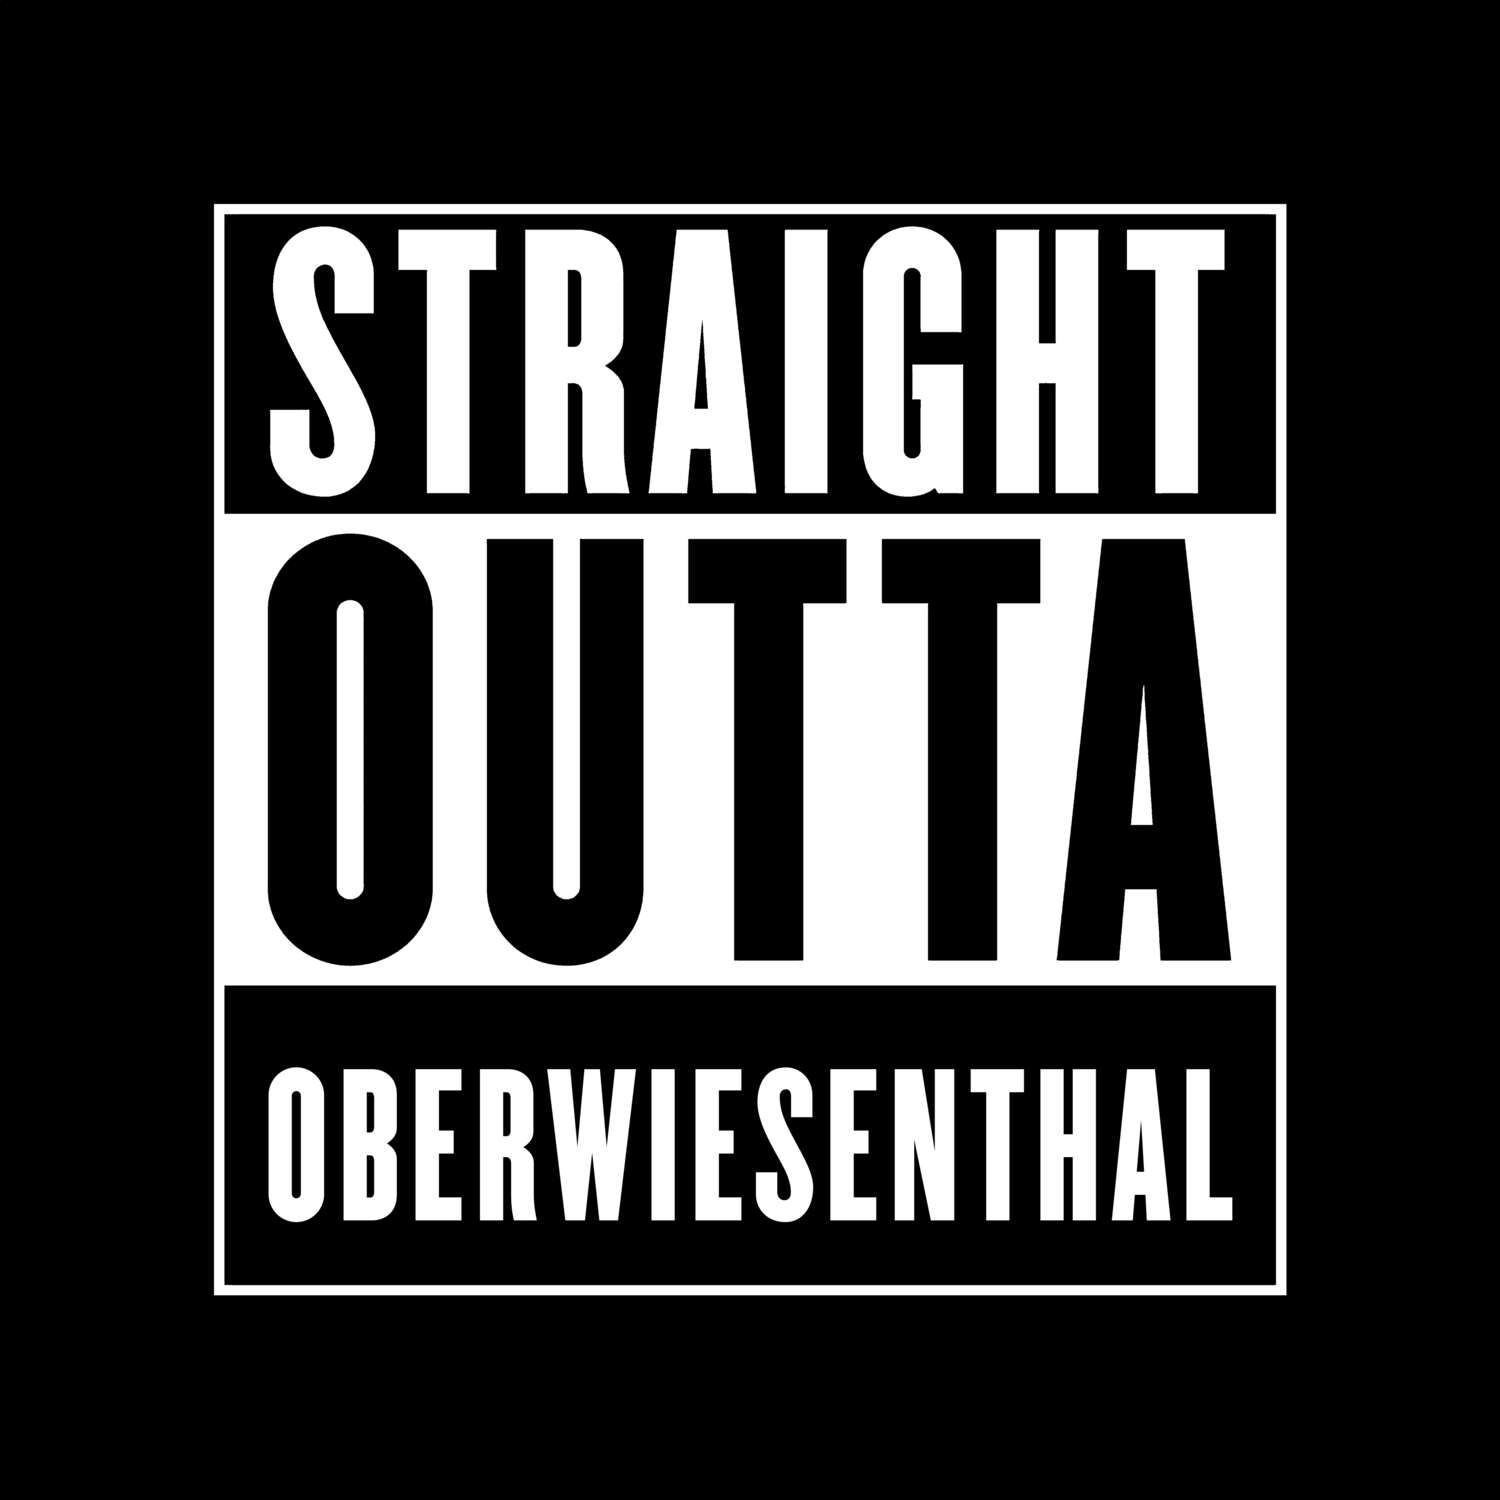 Oberwiesenthal T-Shirt »Straight Outta«